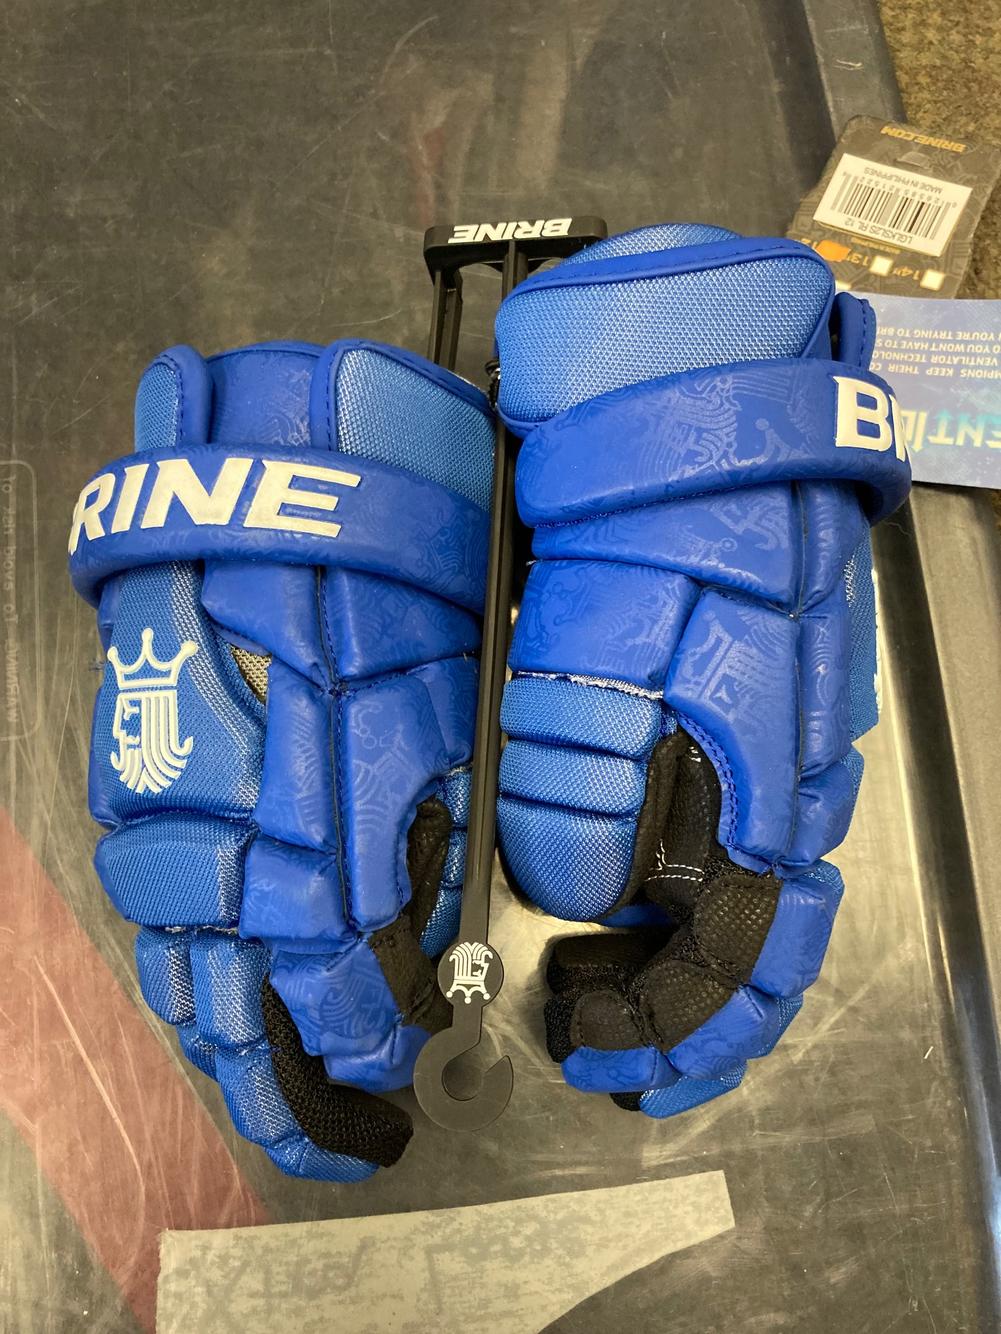 NEW Brine King Superlight 3 Lacrosse Lax Gloves White Lists @ $120 Black 